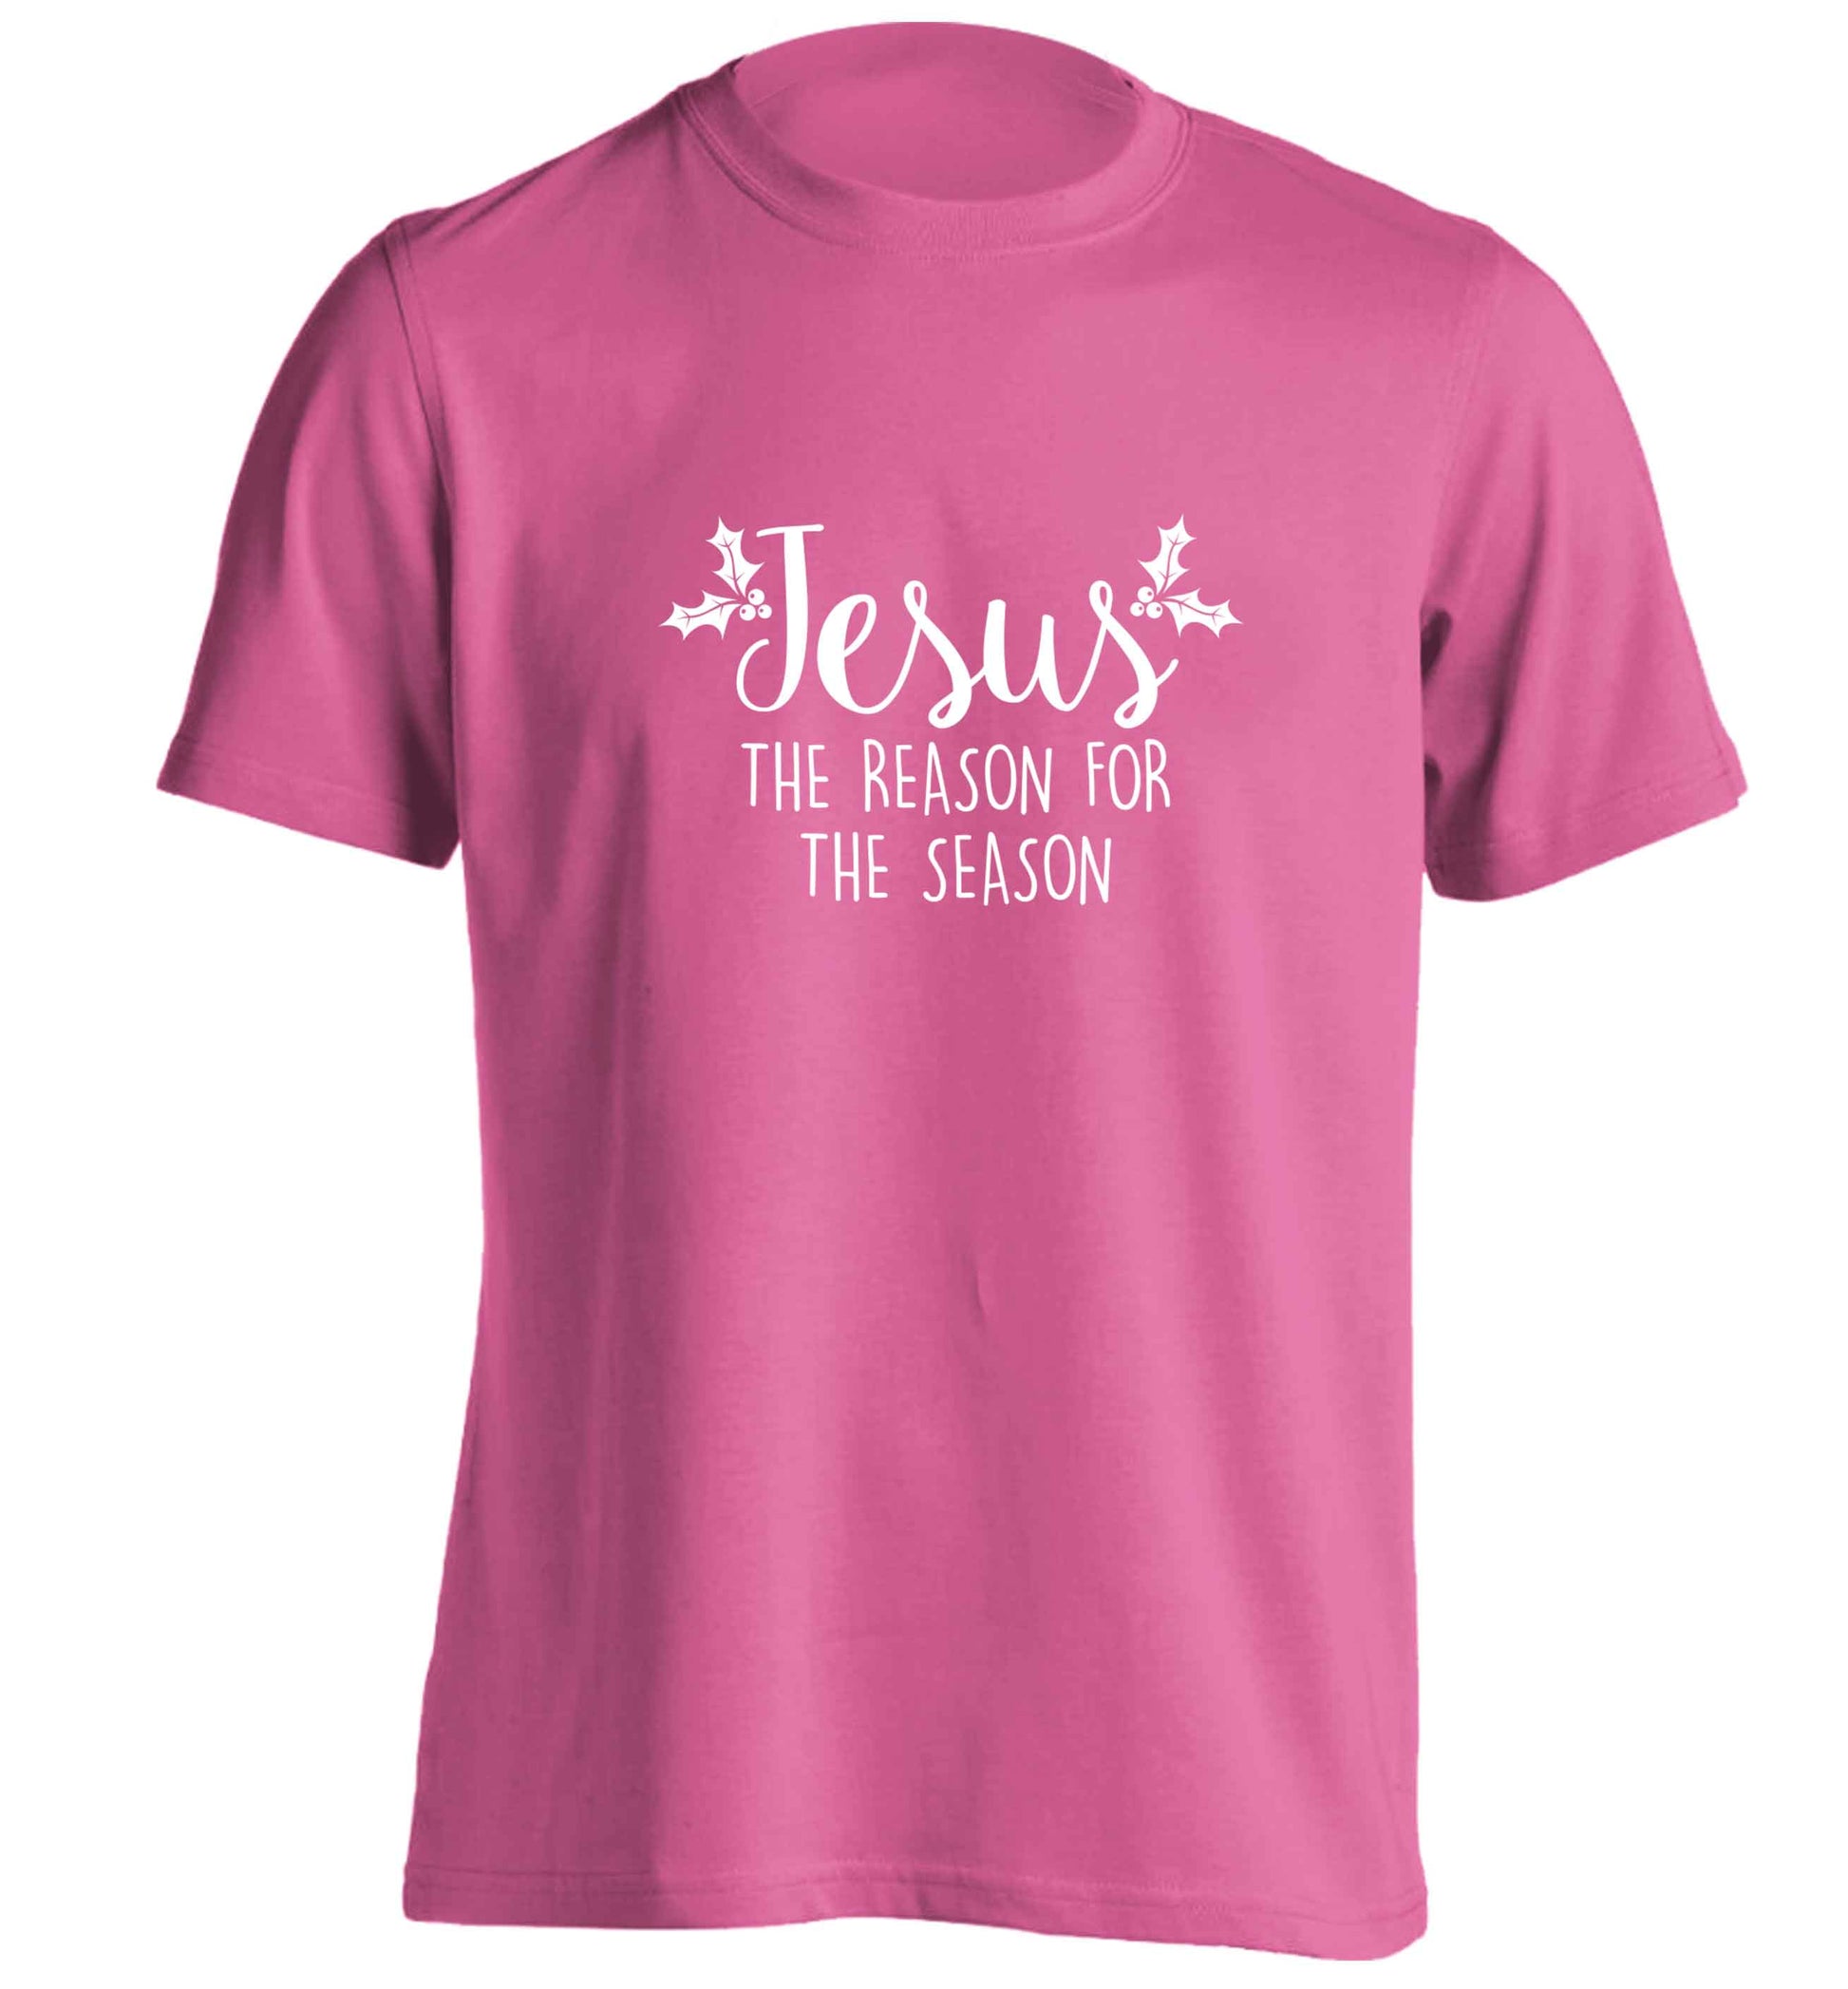 Jesus the reason for the season adults unisex pink Tshirt 2XL